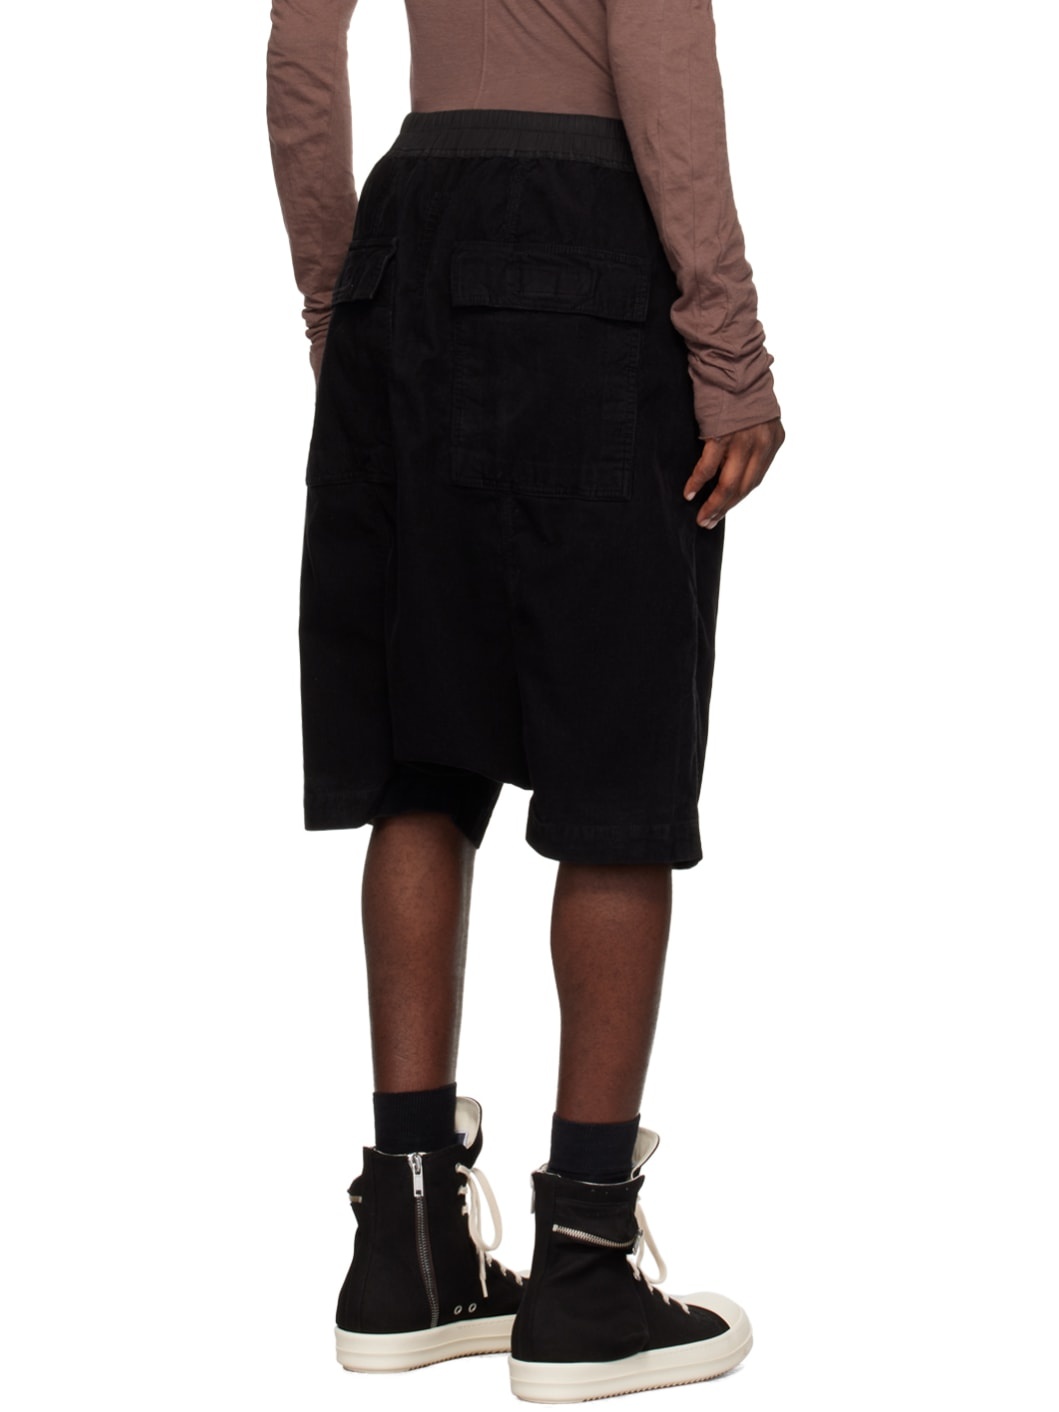 Black Pods Shorts - 3